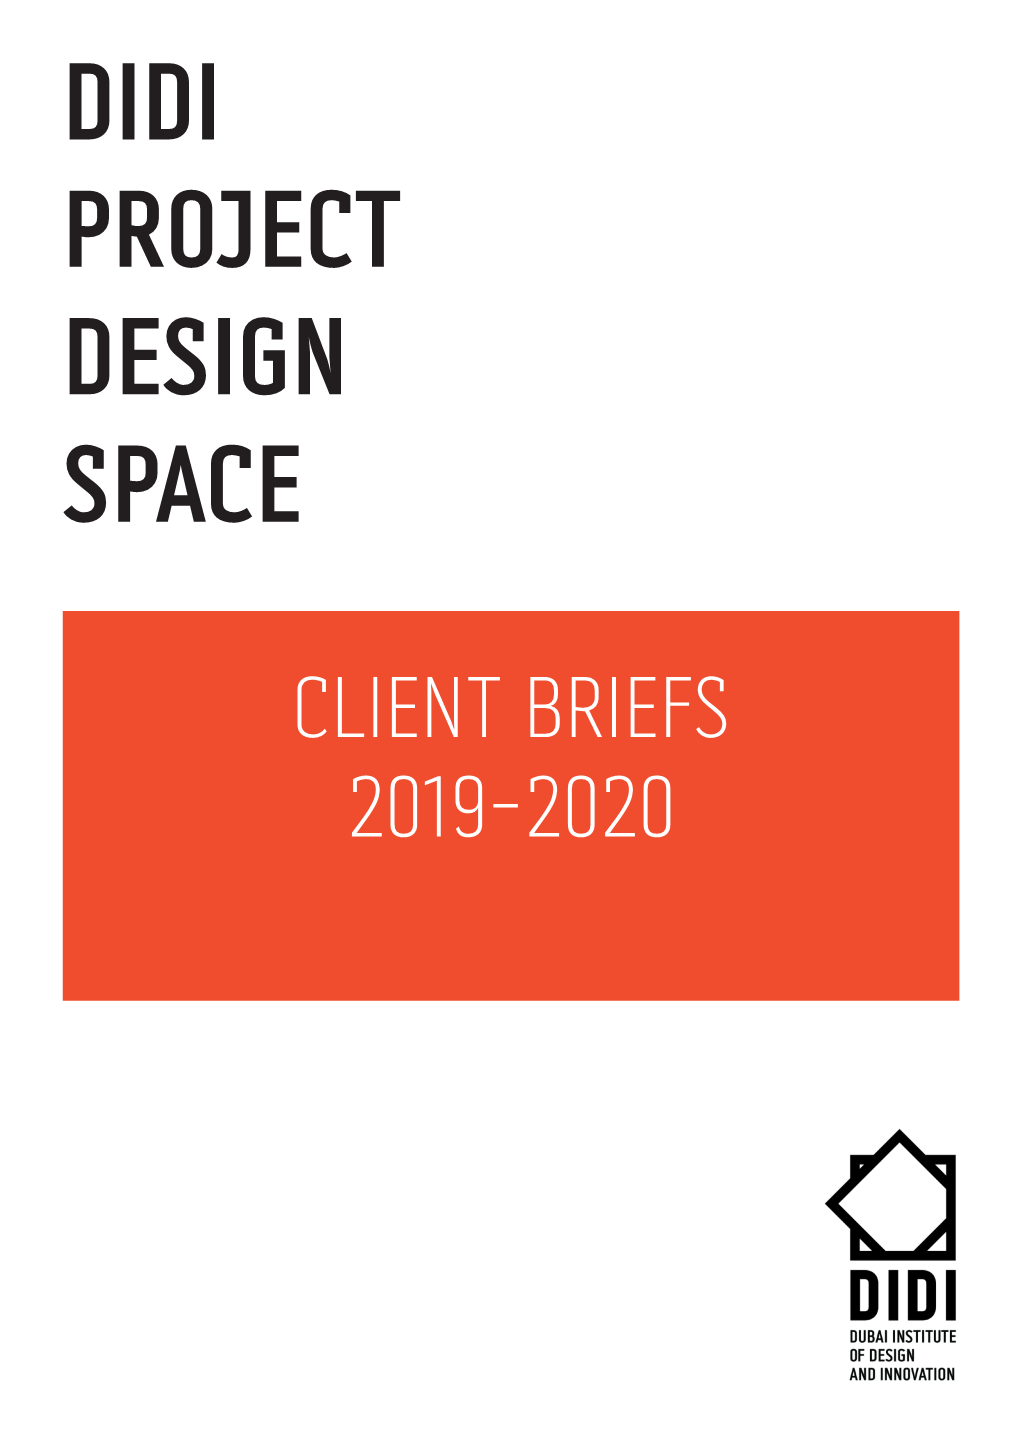 Didi Project Design Space